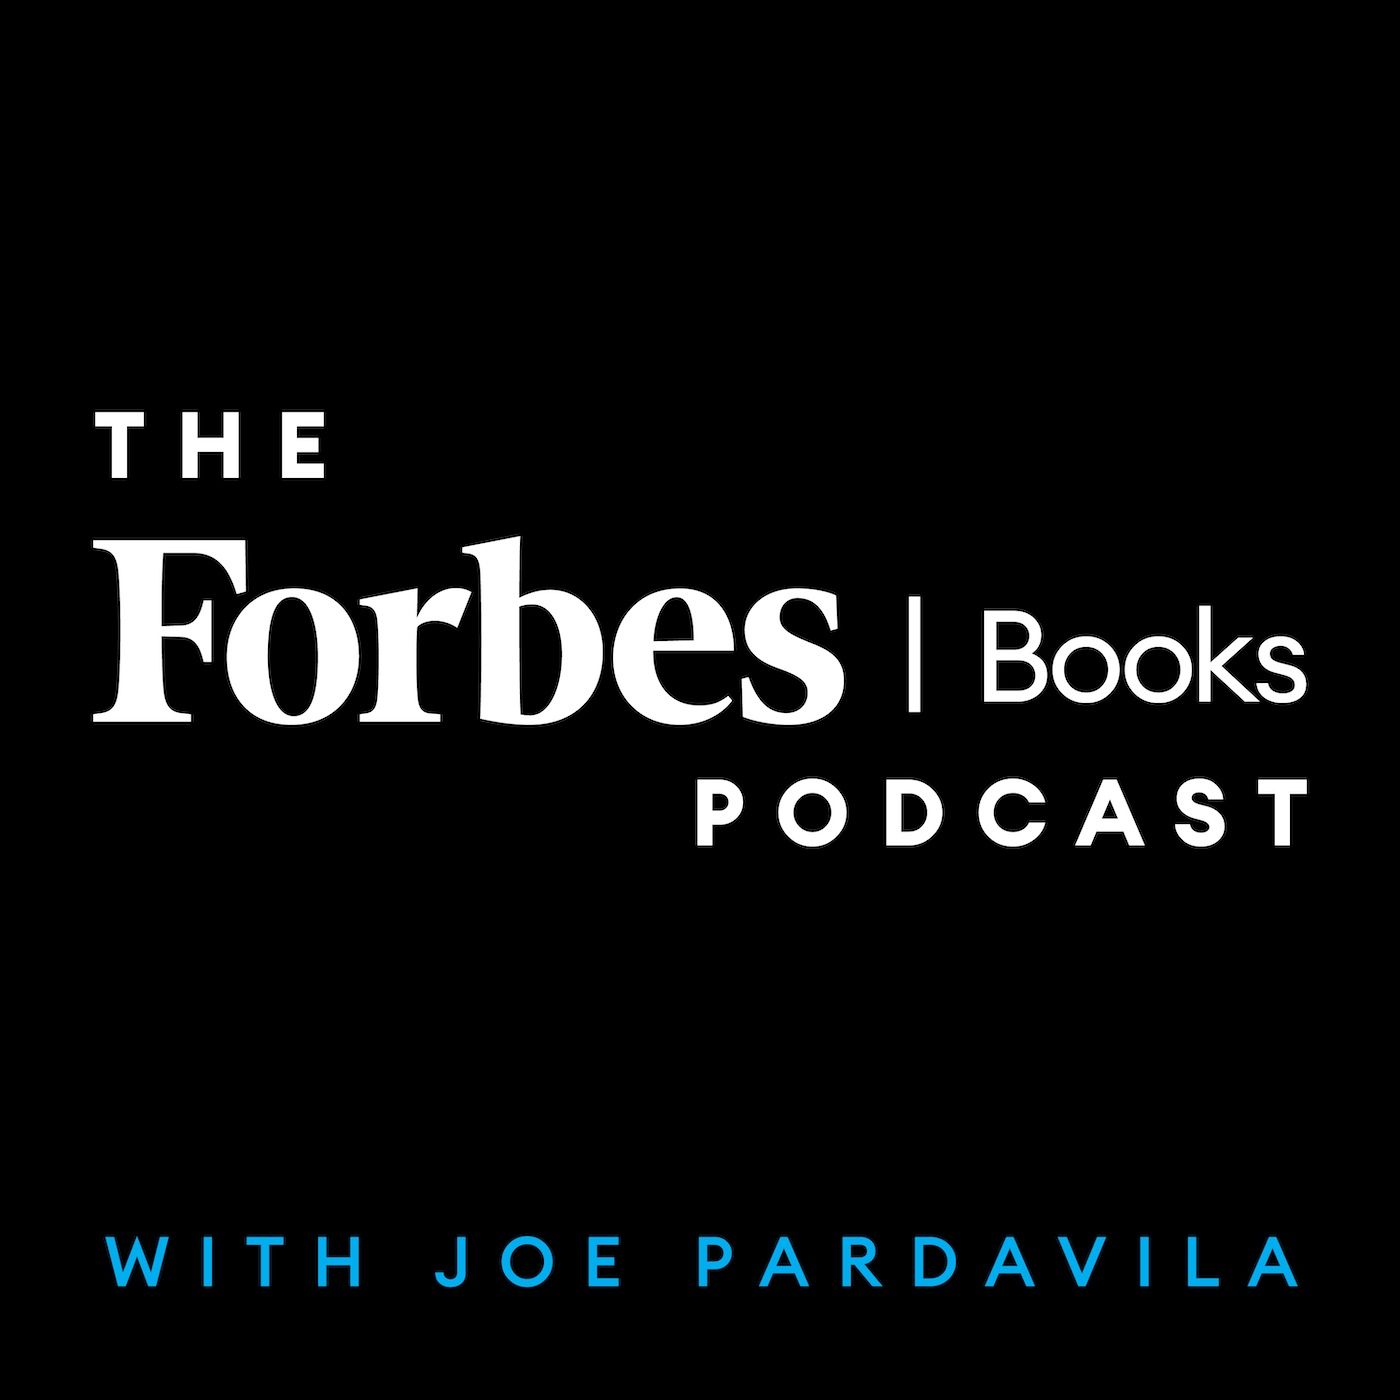 The Forbes Books Podcast with Joe Pardavila